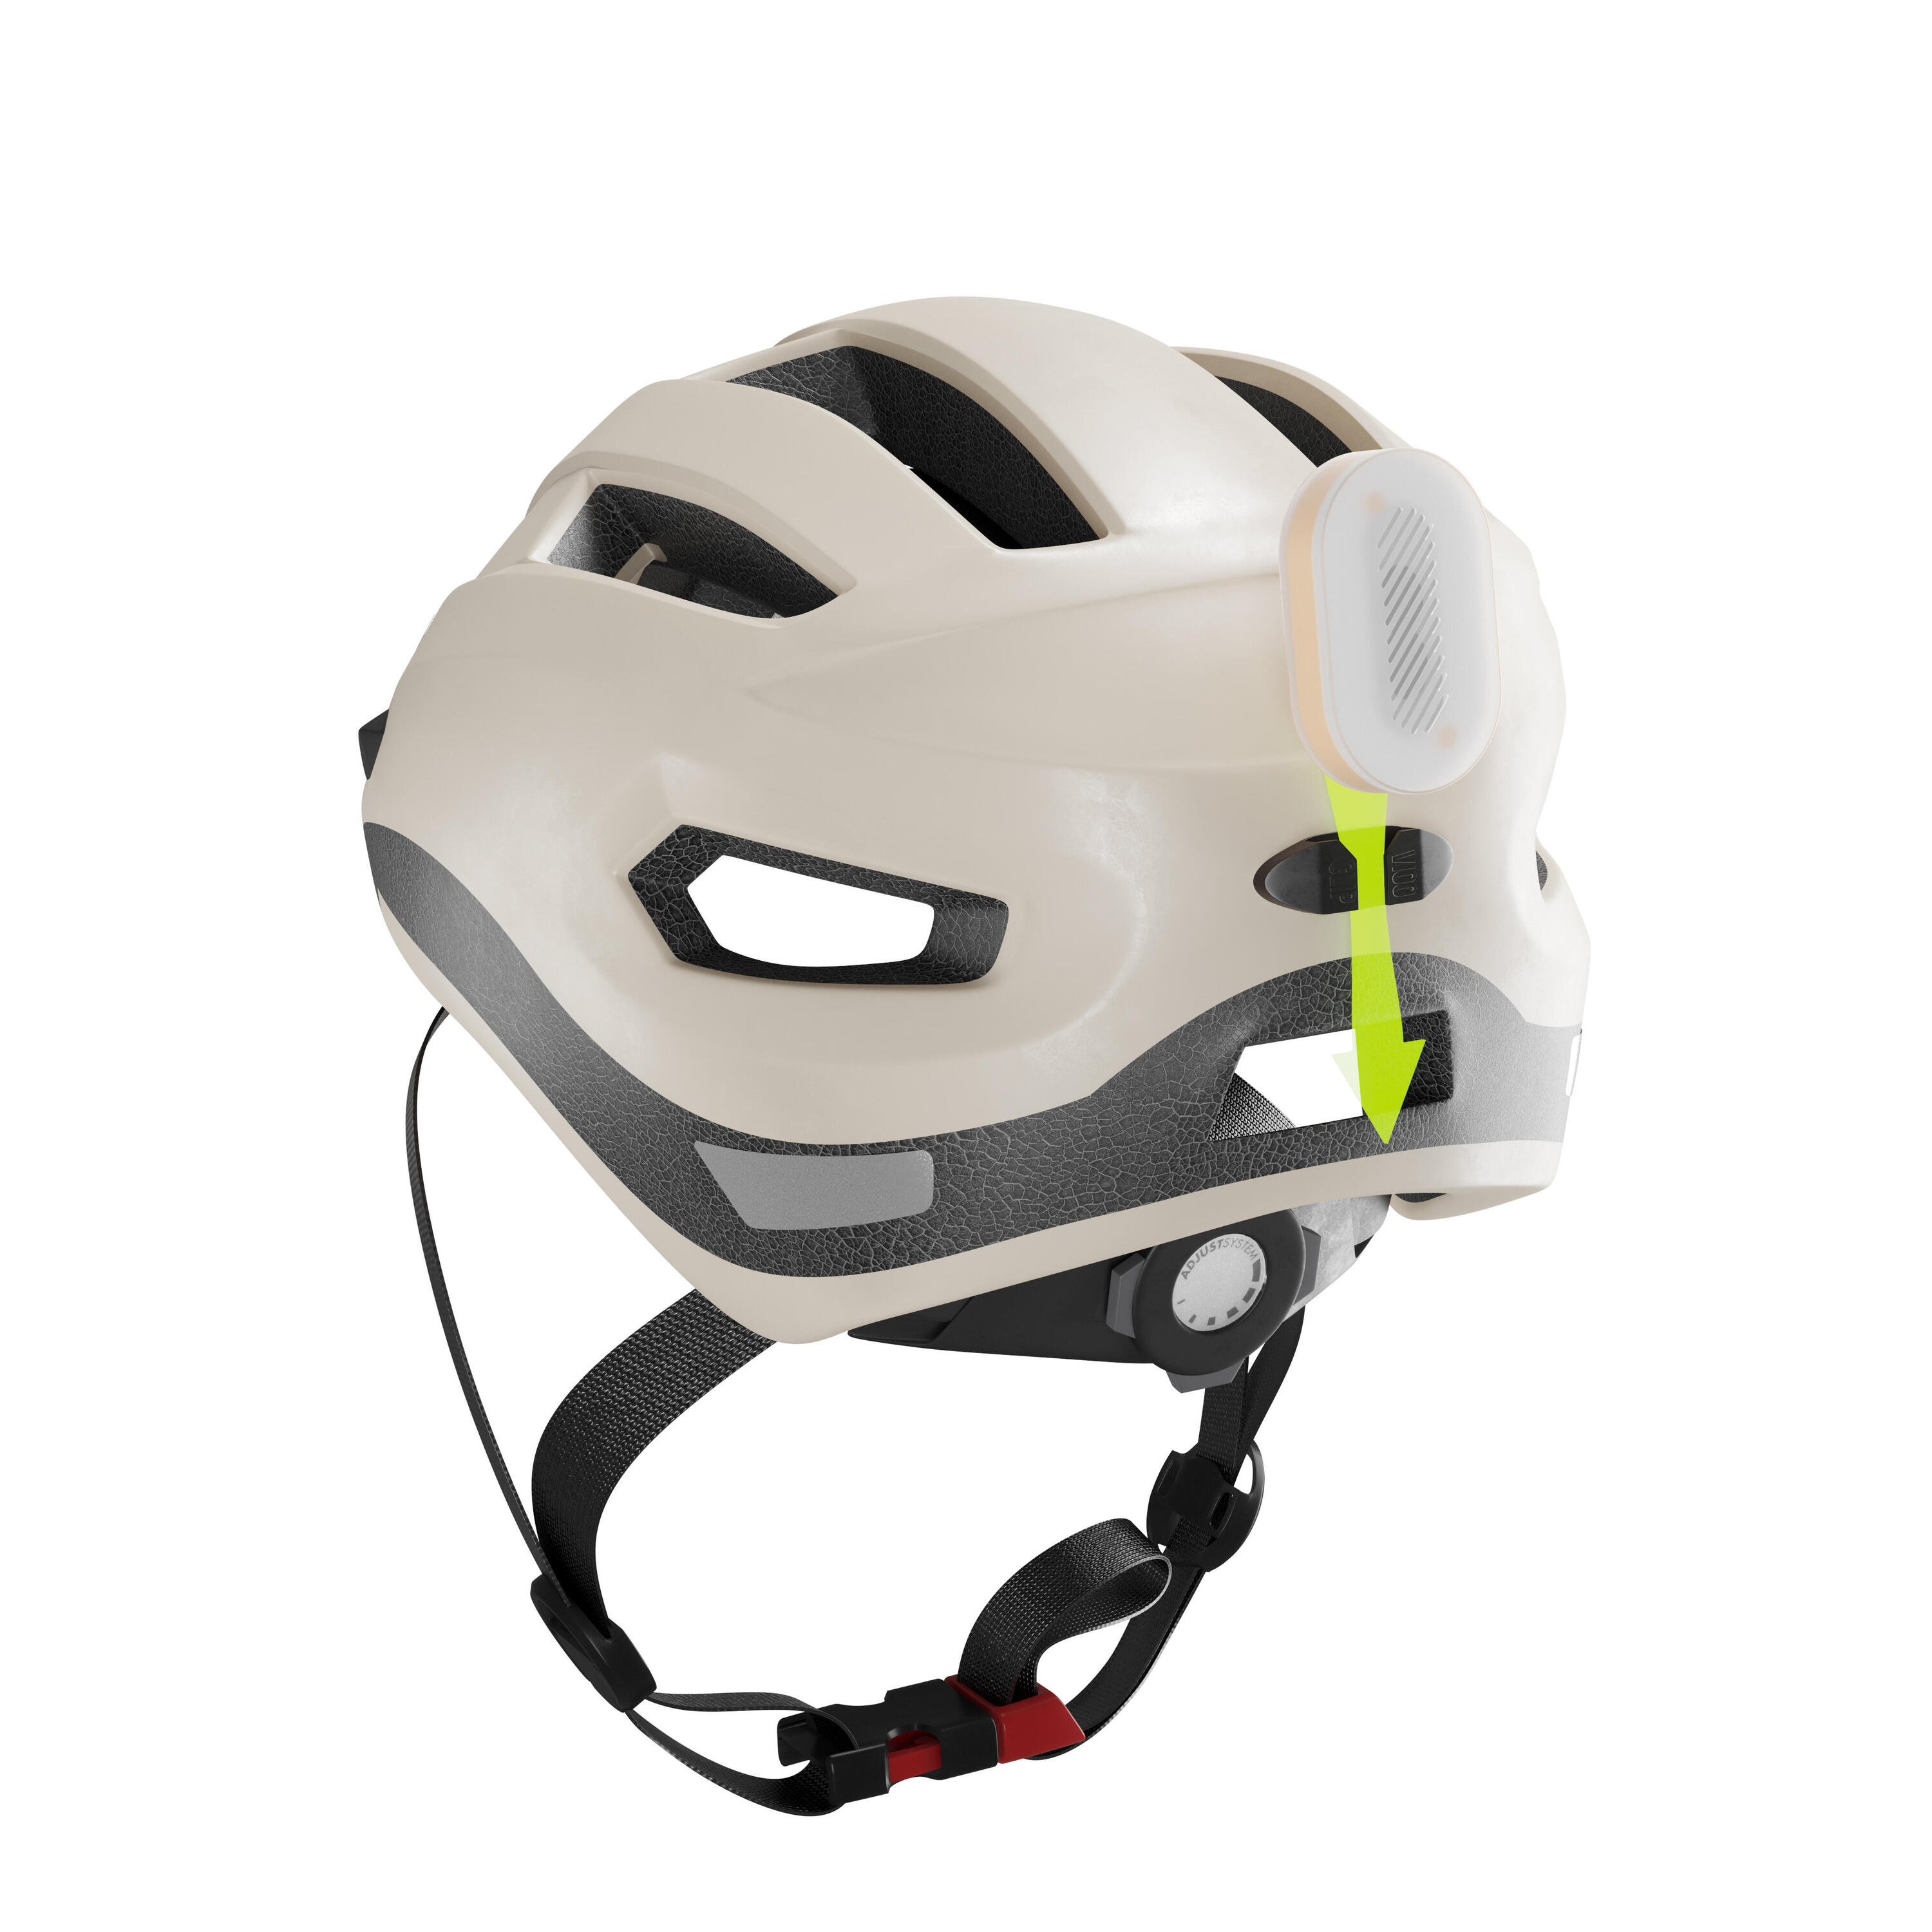 City Cycling Helmet 500 4/10